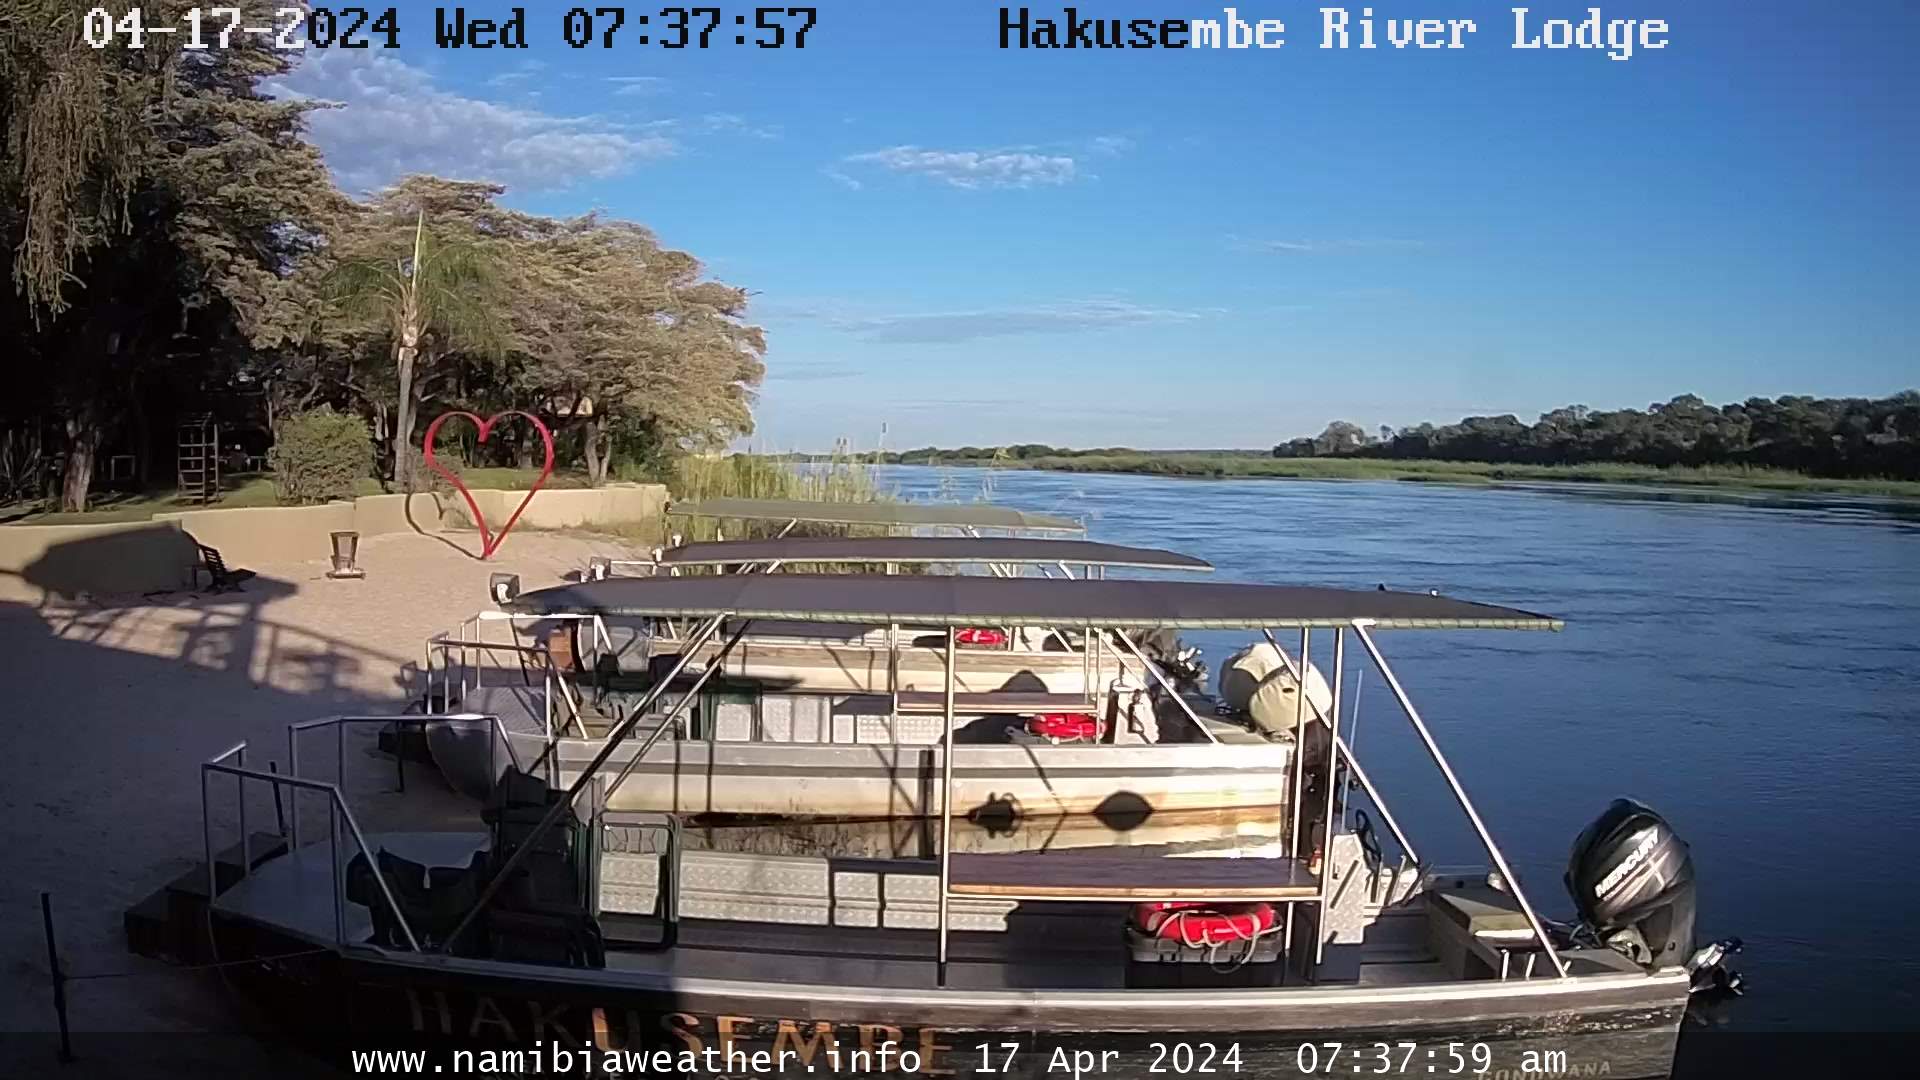 fiume Okavango, Hakusembe River Lodge